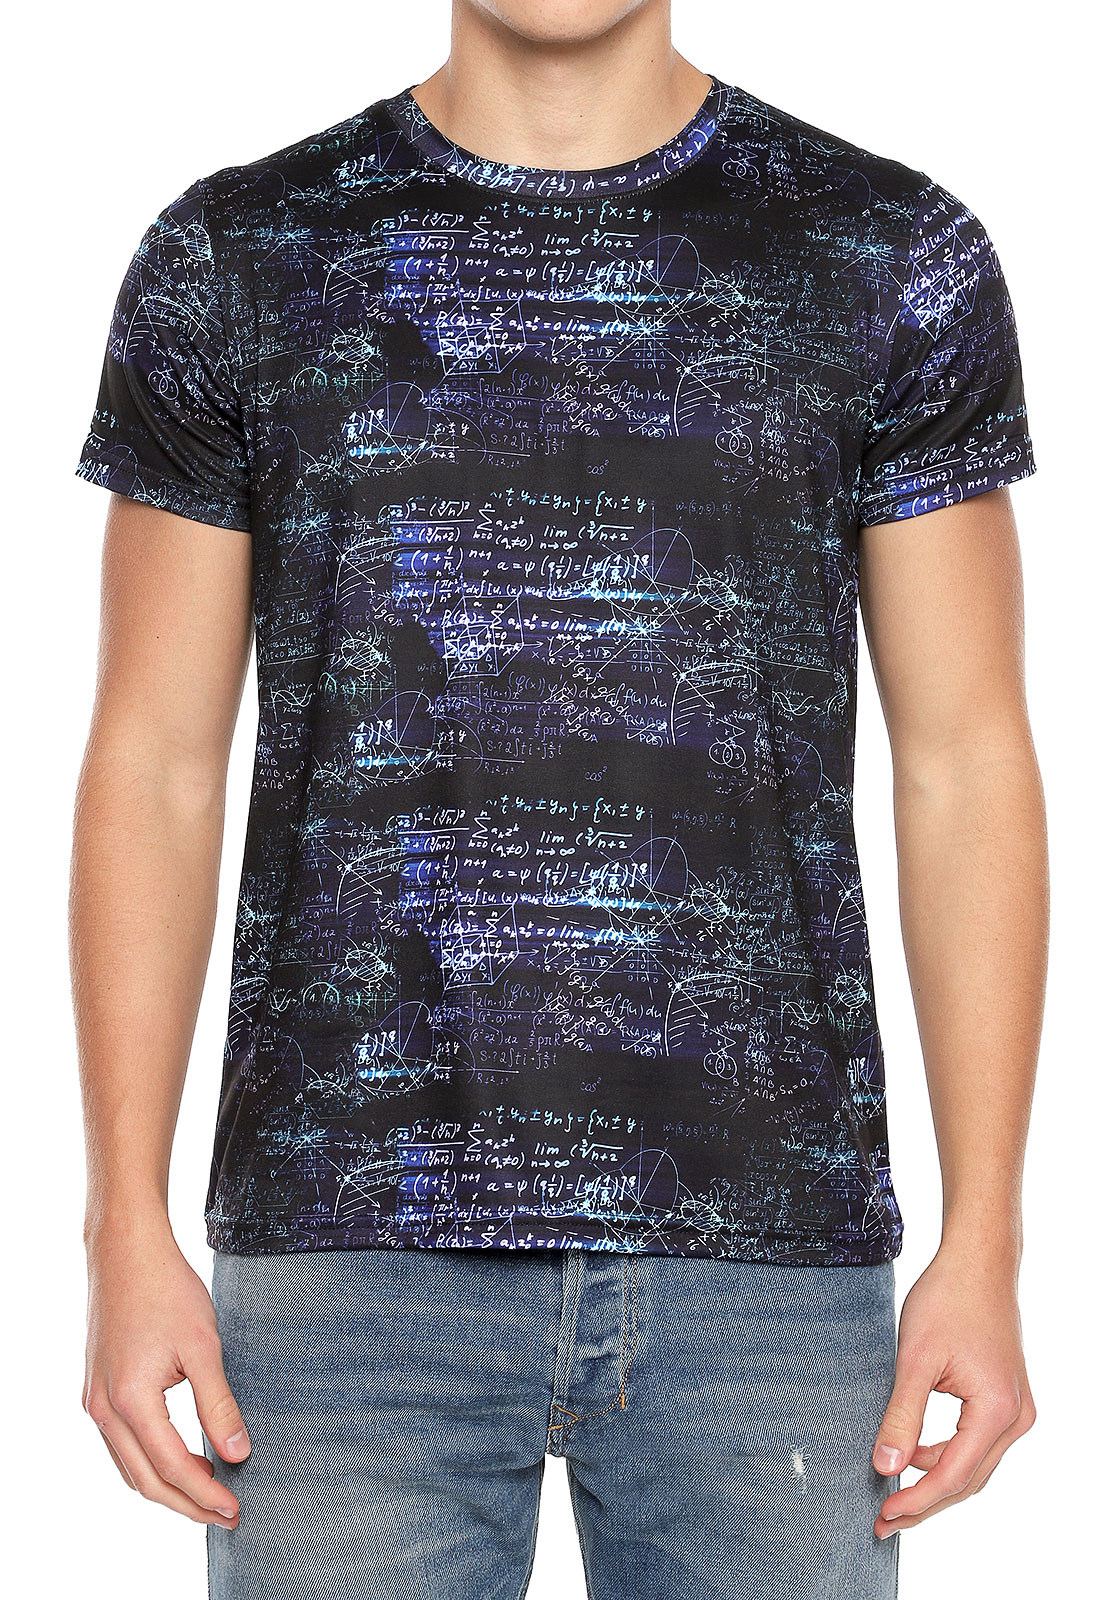 T-shirt design for a roblox content creator 100% creativity, concurso Camisa